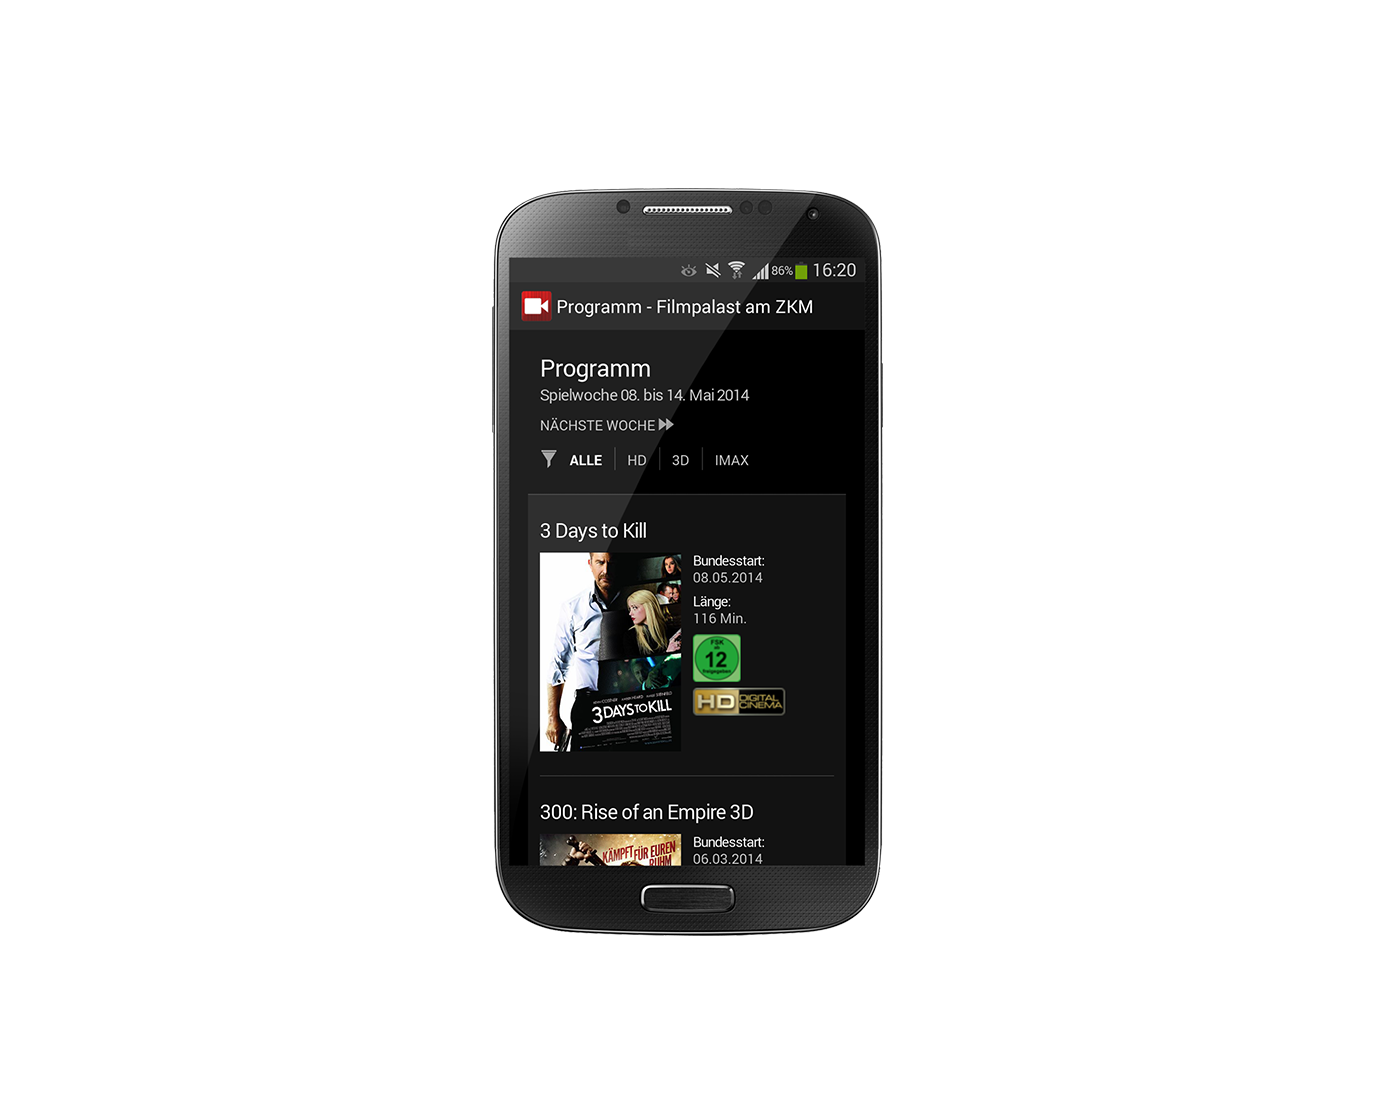 Bildmontage Filmpalast am ZKM Android-App Mobil Website mit aktuellem Programm